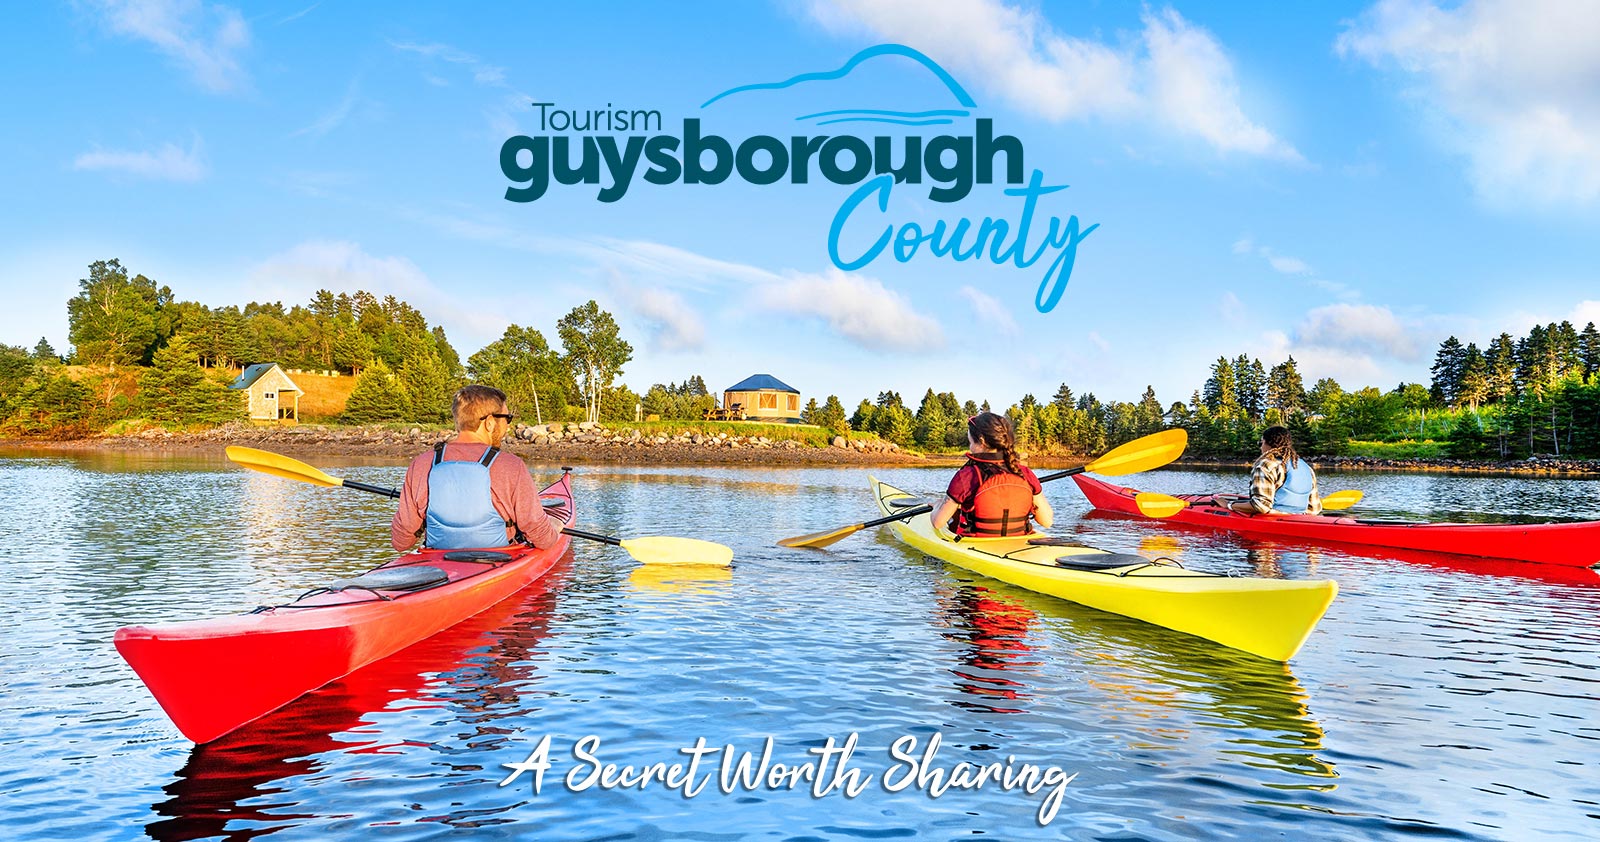 Visit Guysborough - A Secret Worth Sharing